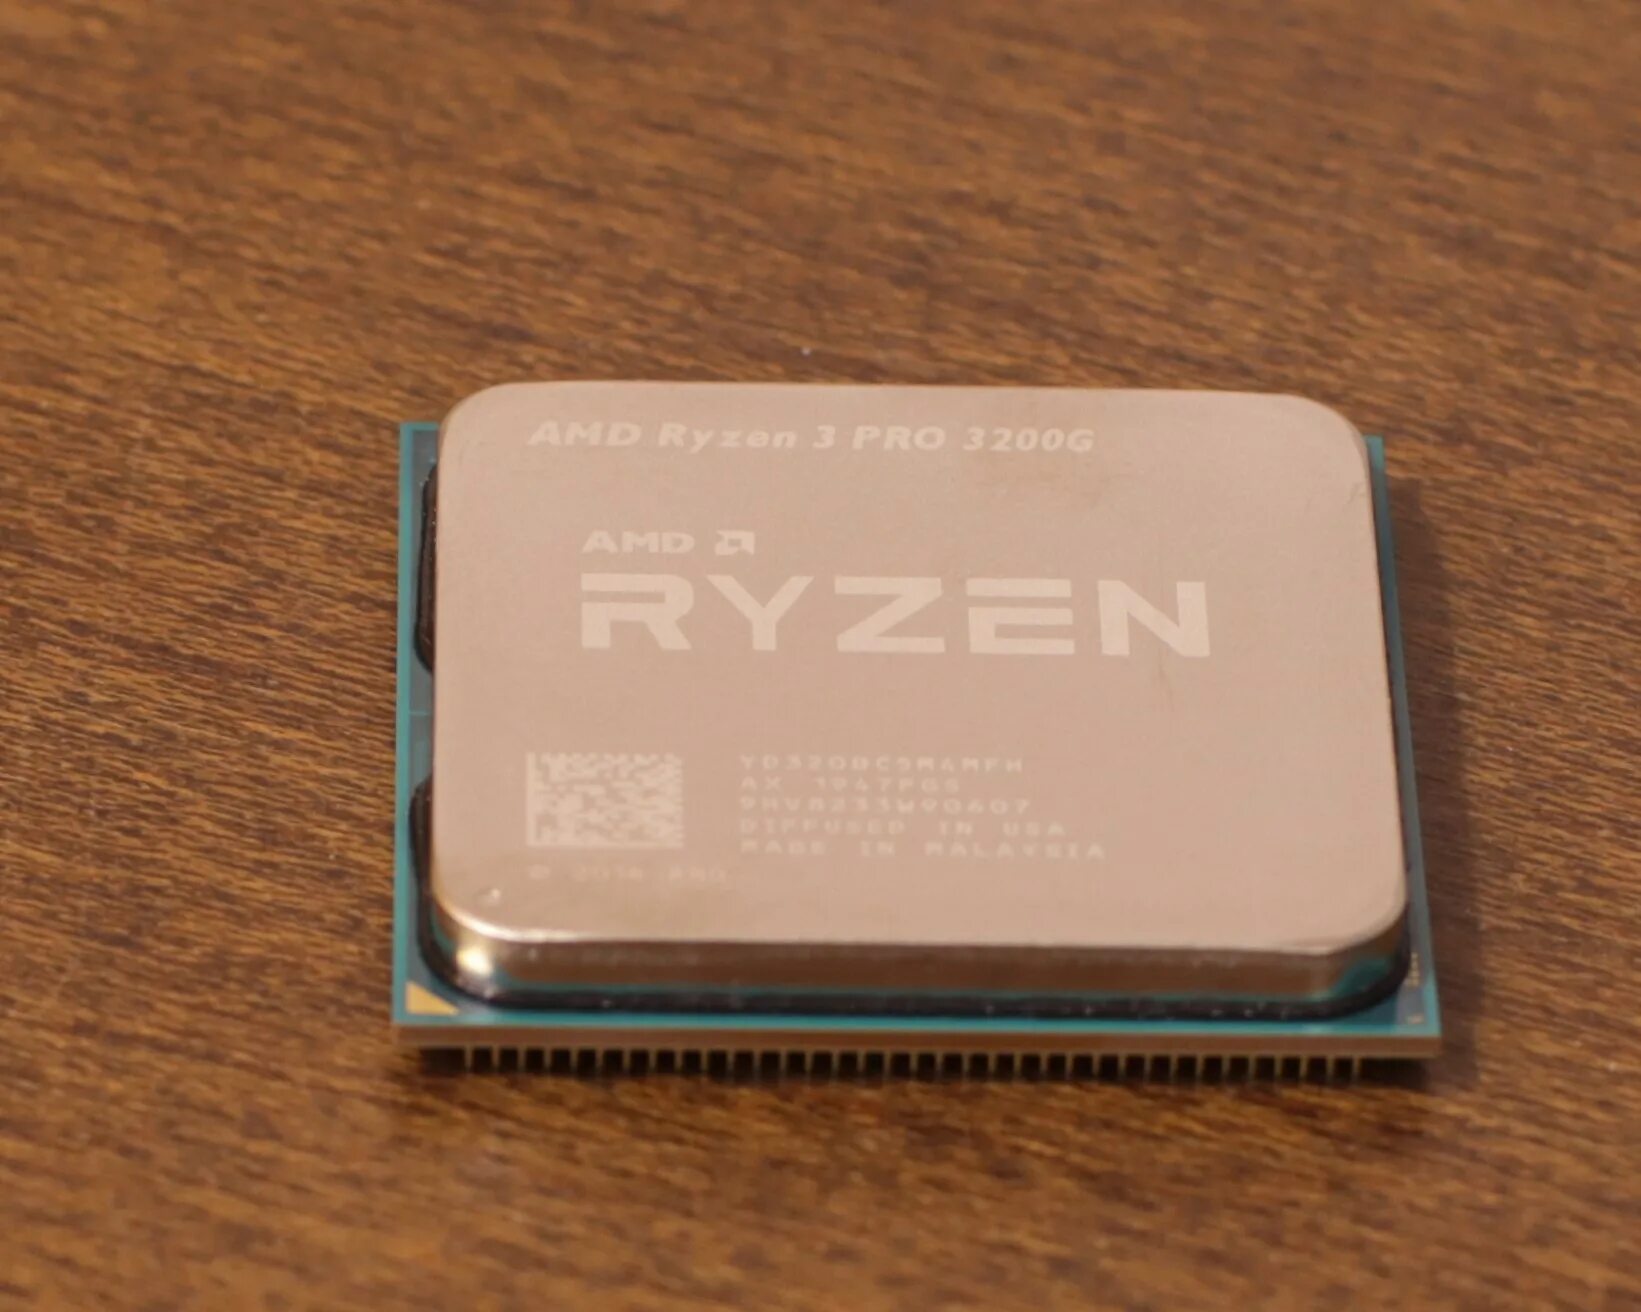 AMD Ryzen 3 Pro 3200g. Процессор AMD Ryzen 3 3200g. Процессор AMD Ryzen 3 3200g am4. Ryzen 3 Pro 3200g процессор. Ryzen 3 pro 3200g